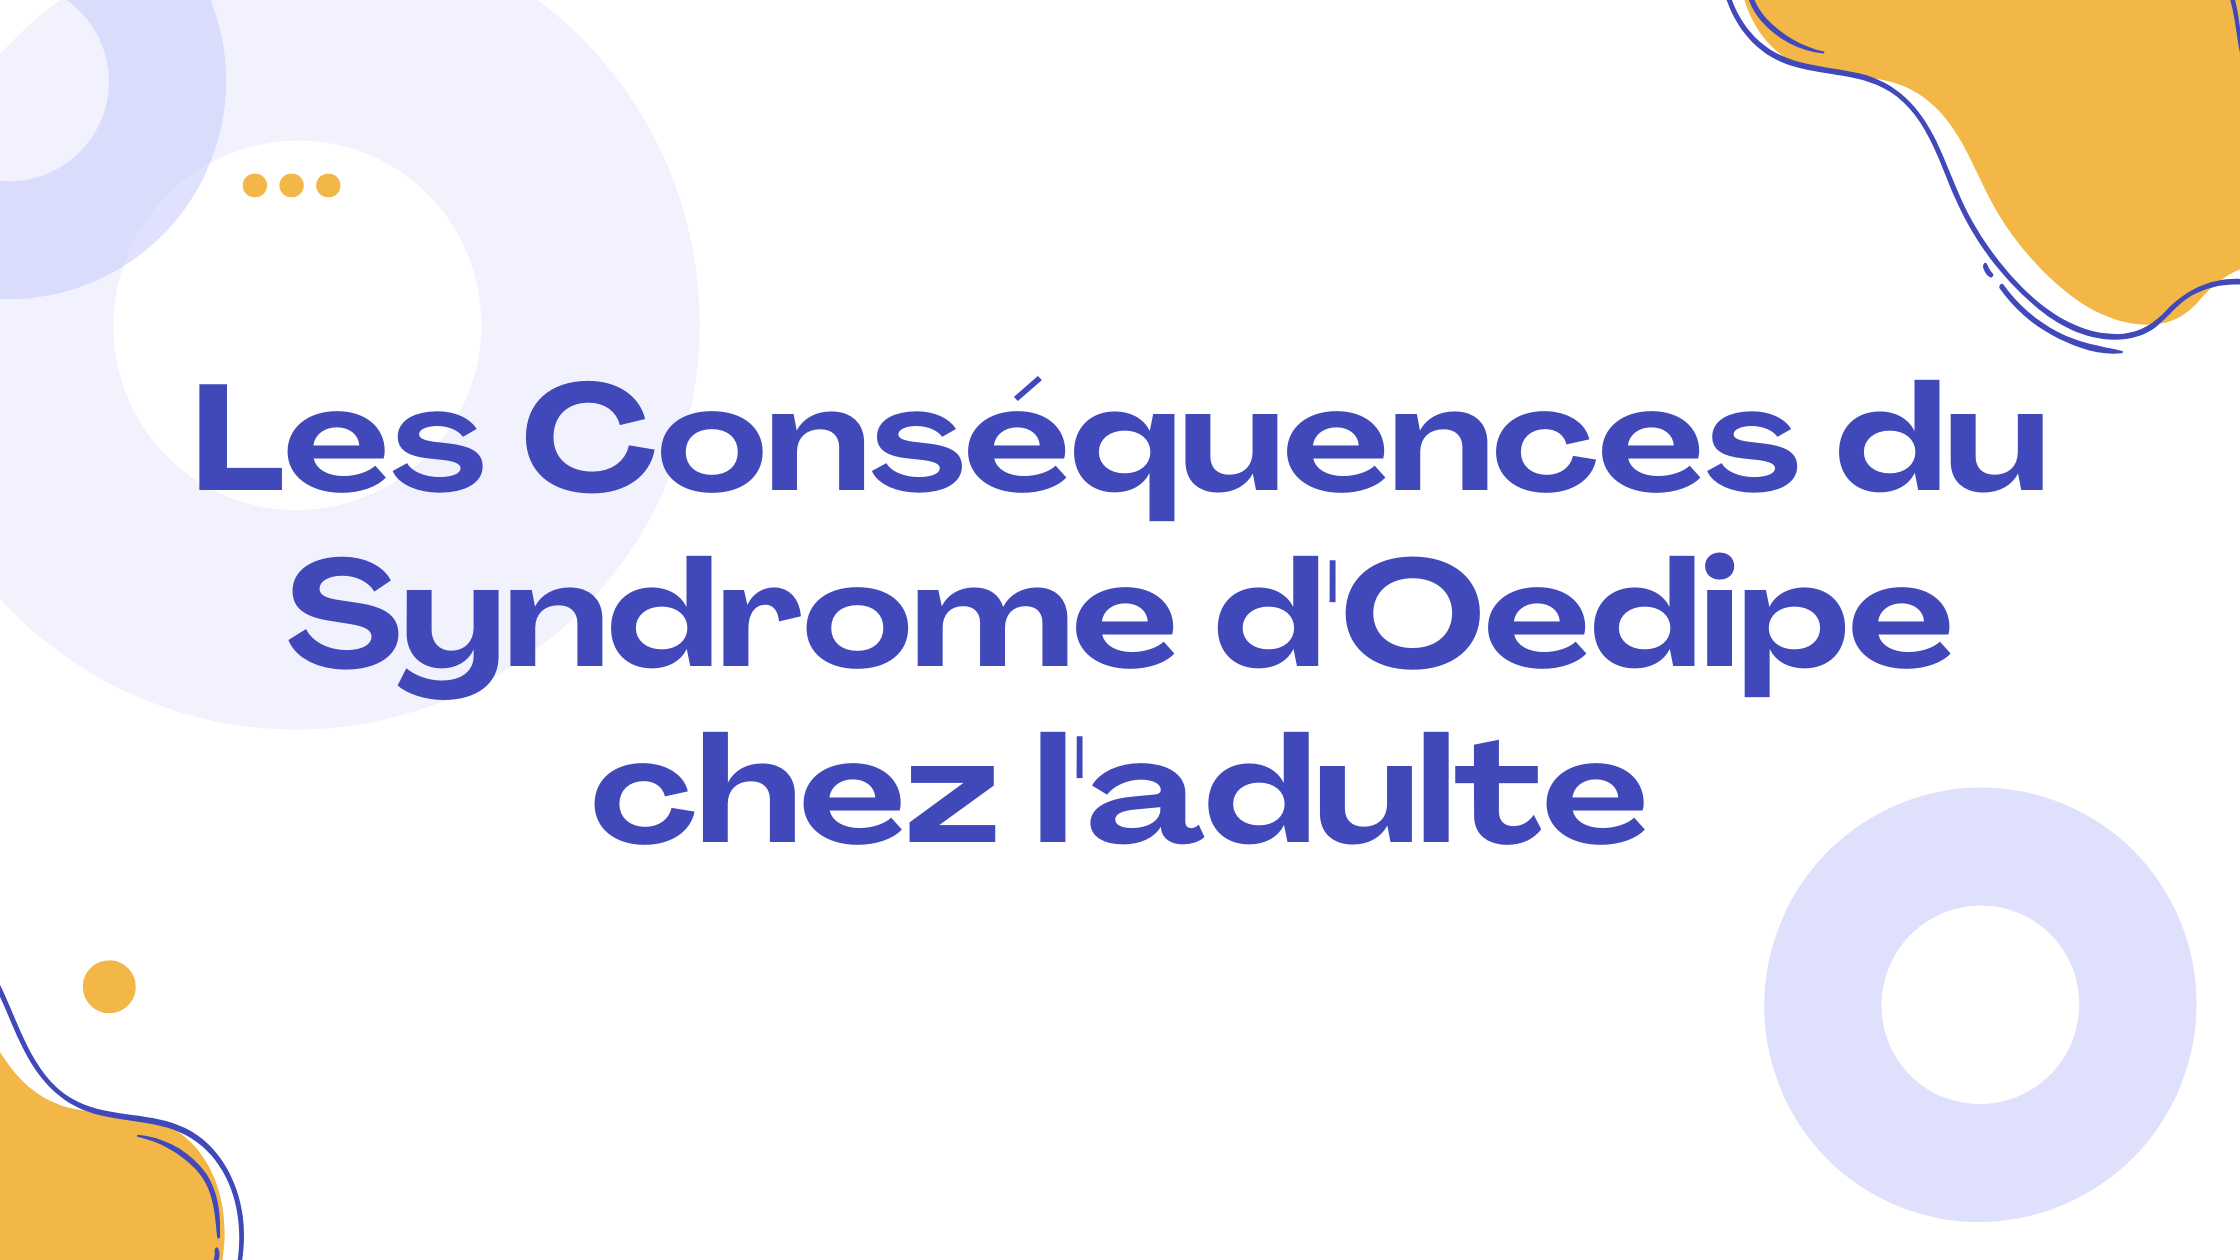 Syndrome d'Oedipe Chez l'Adulte | 5 Points Important